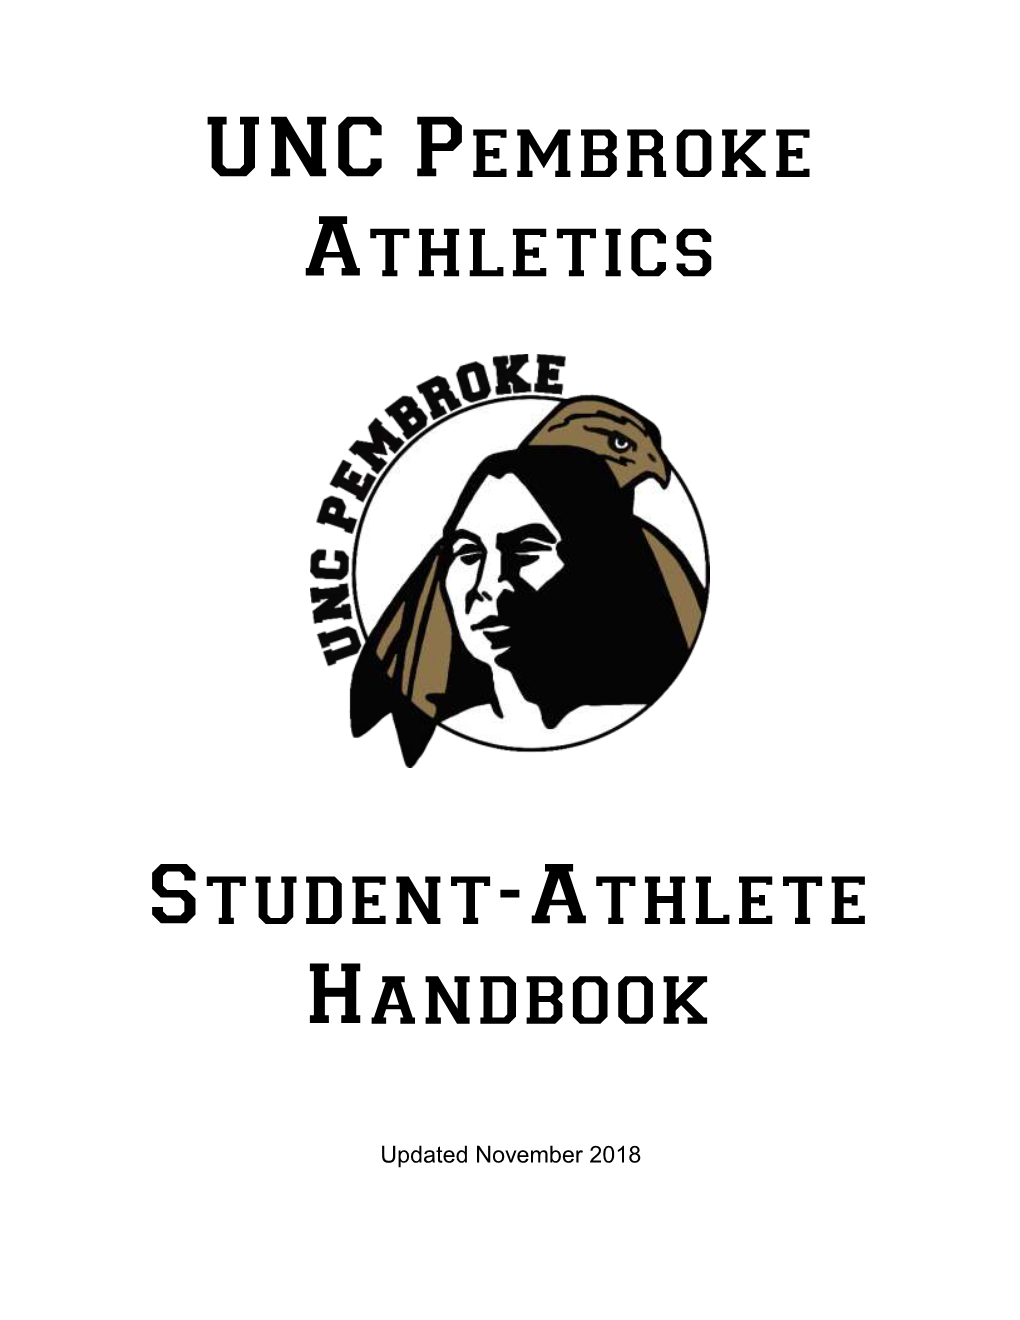 UNC Pembroke Athletics Student-Athlete Handbook